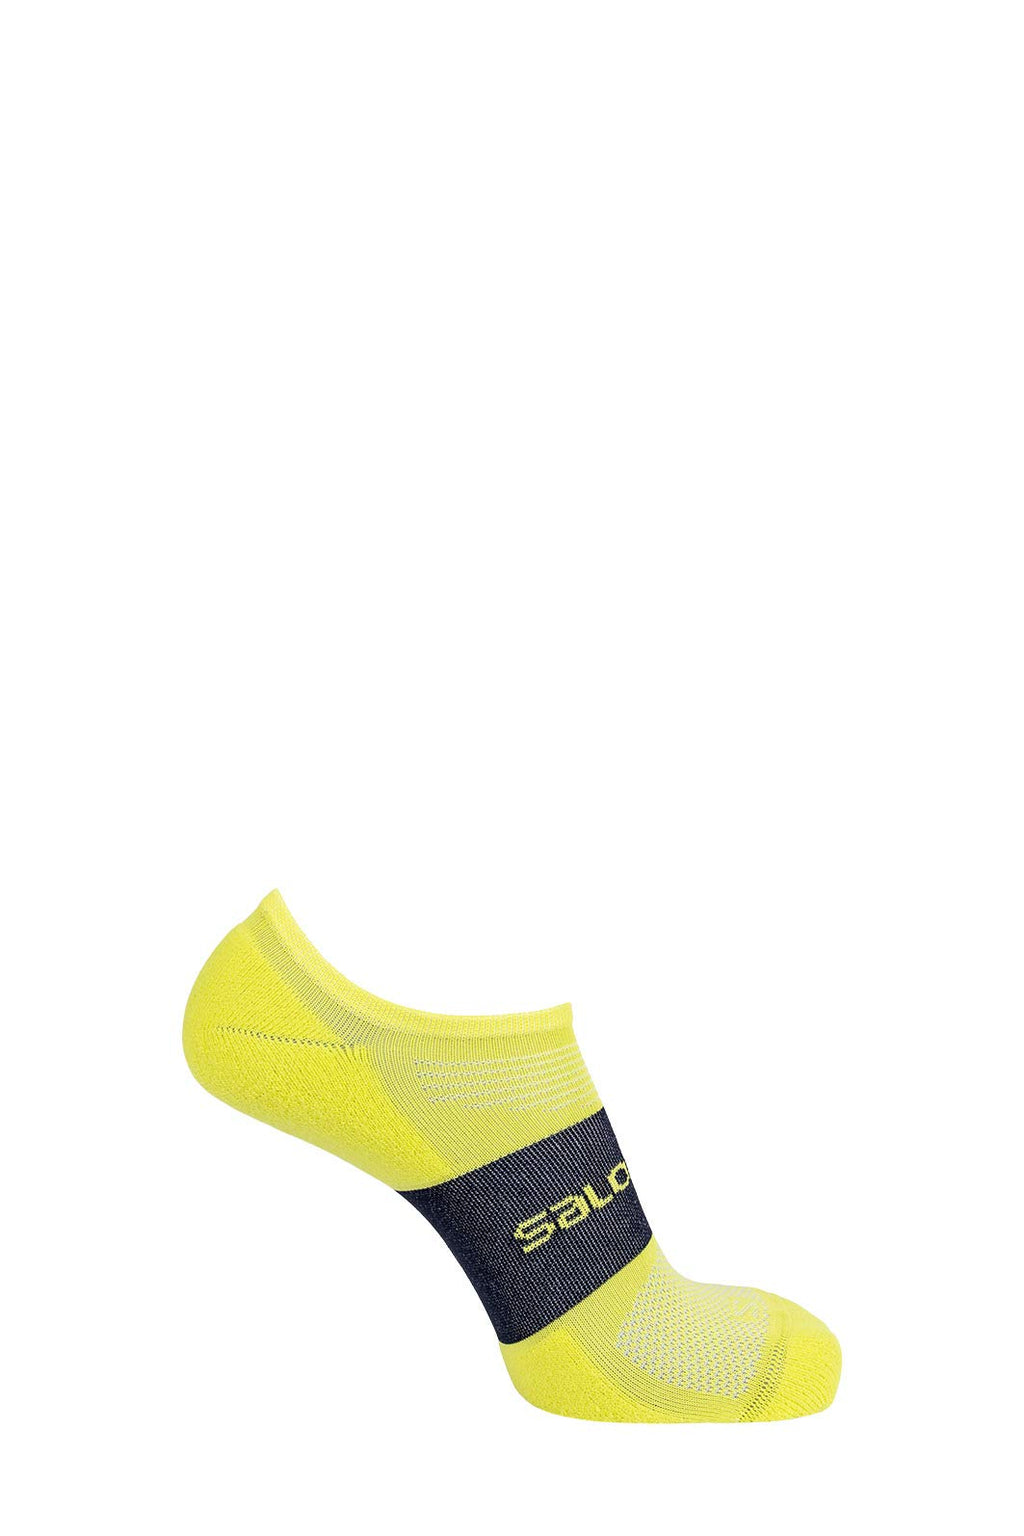 Salomon Standard Socks, Red Dahlia/Citronelle, L Medium - BeesActive Australia